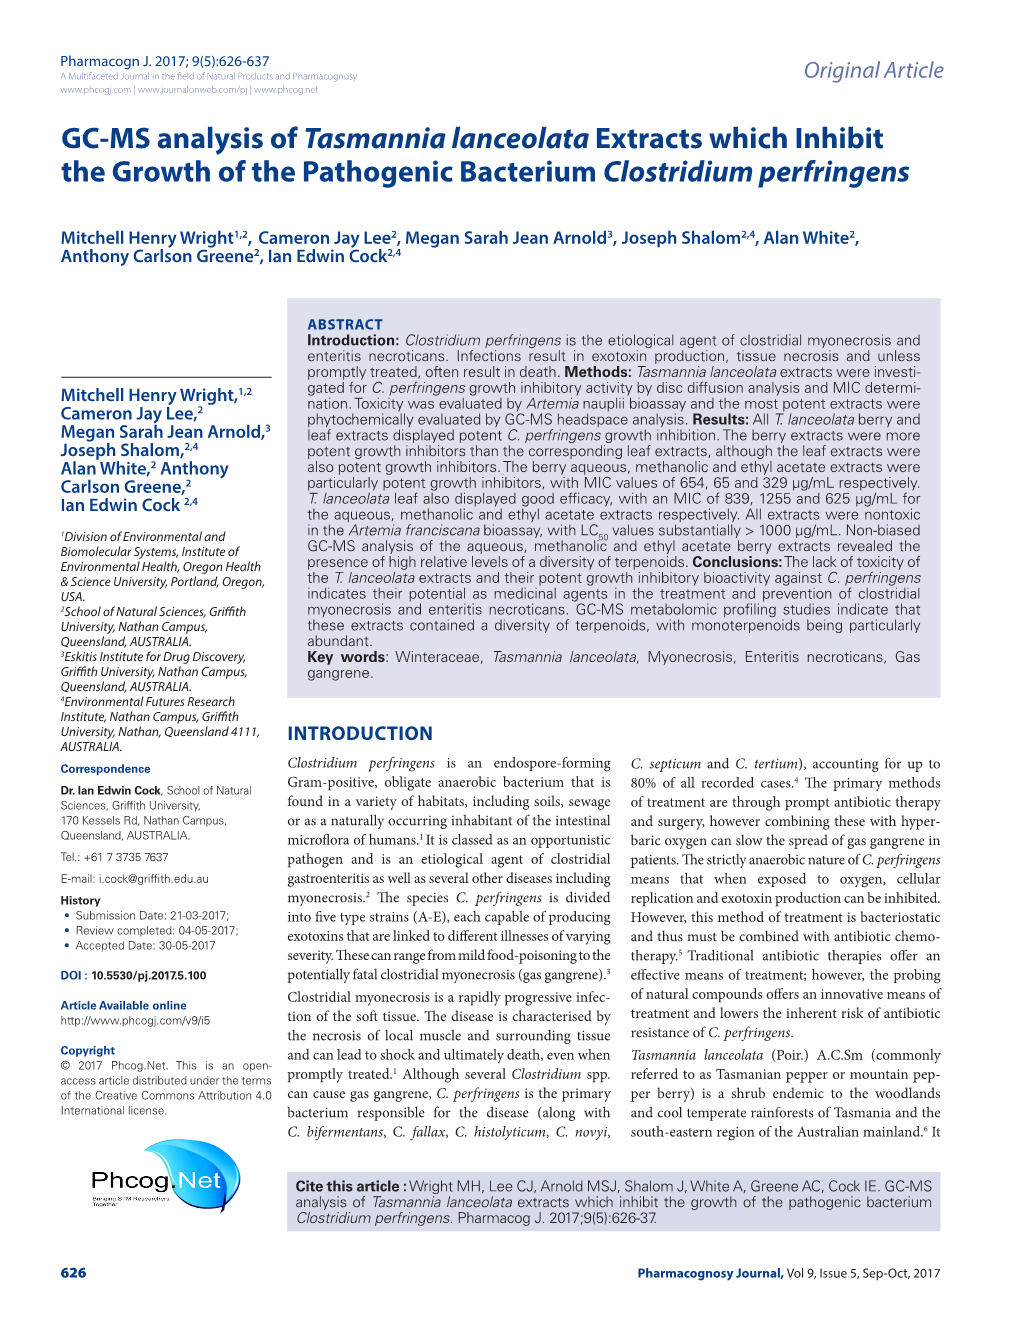 GC-MS Analysis of Tasmannia Lanceolata Extracts Which Inhibit the Growth of the Pathogenic Bacterium Clostridium Perfringens